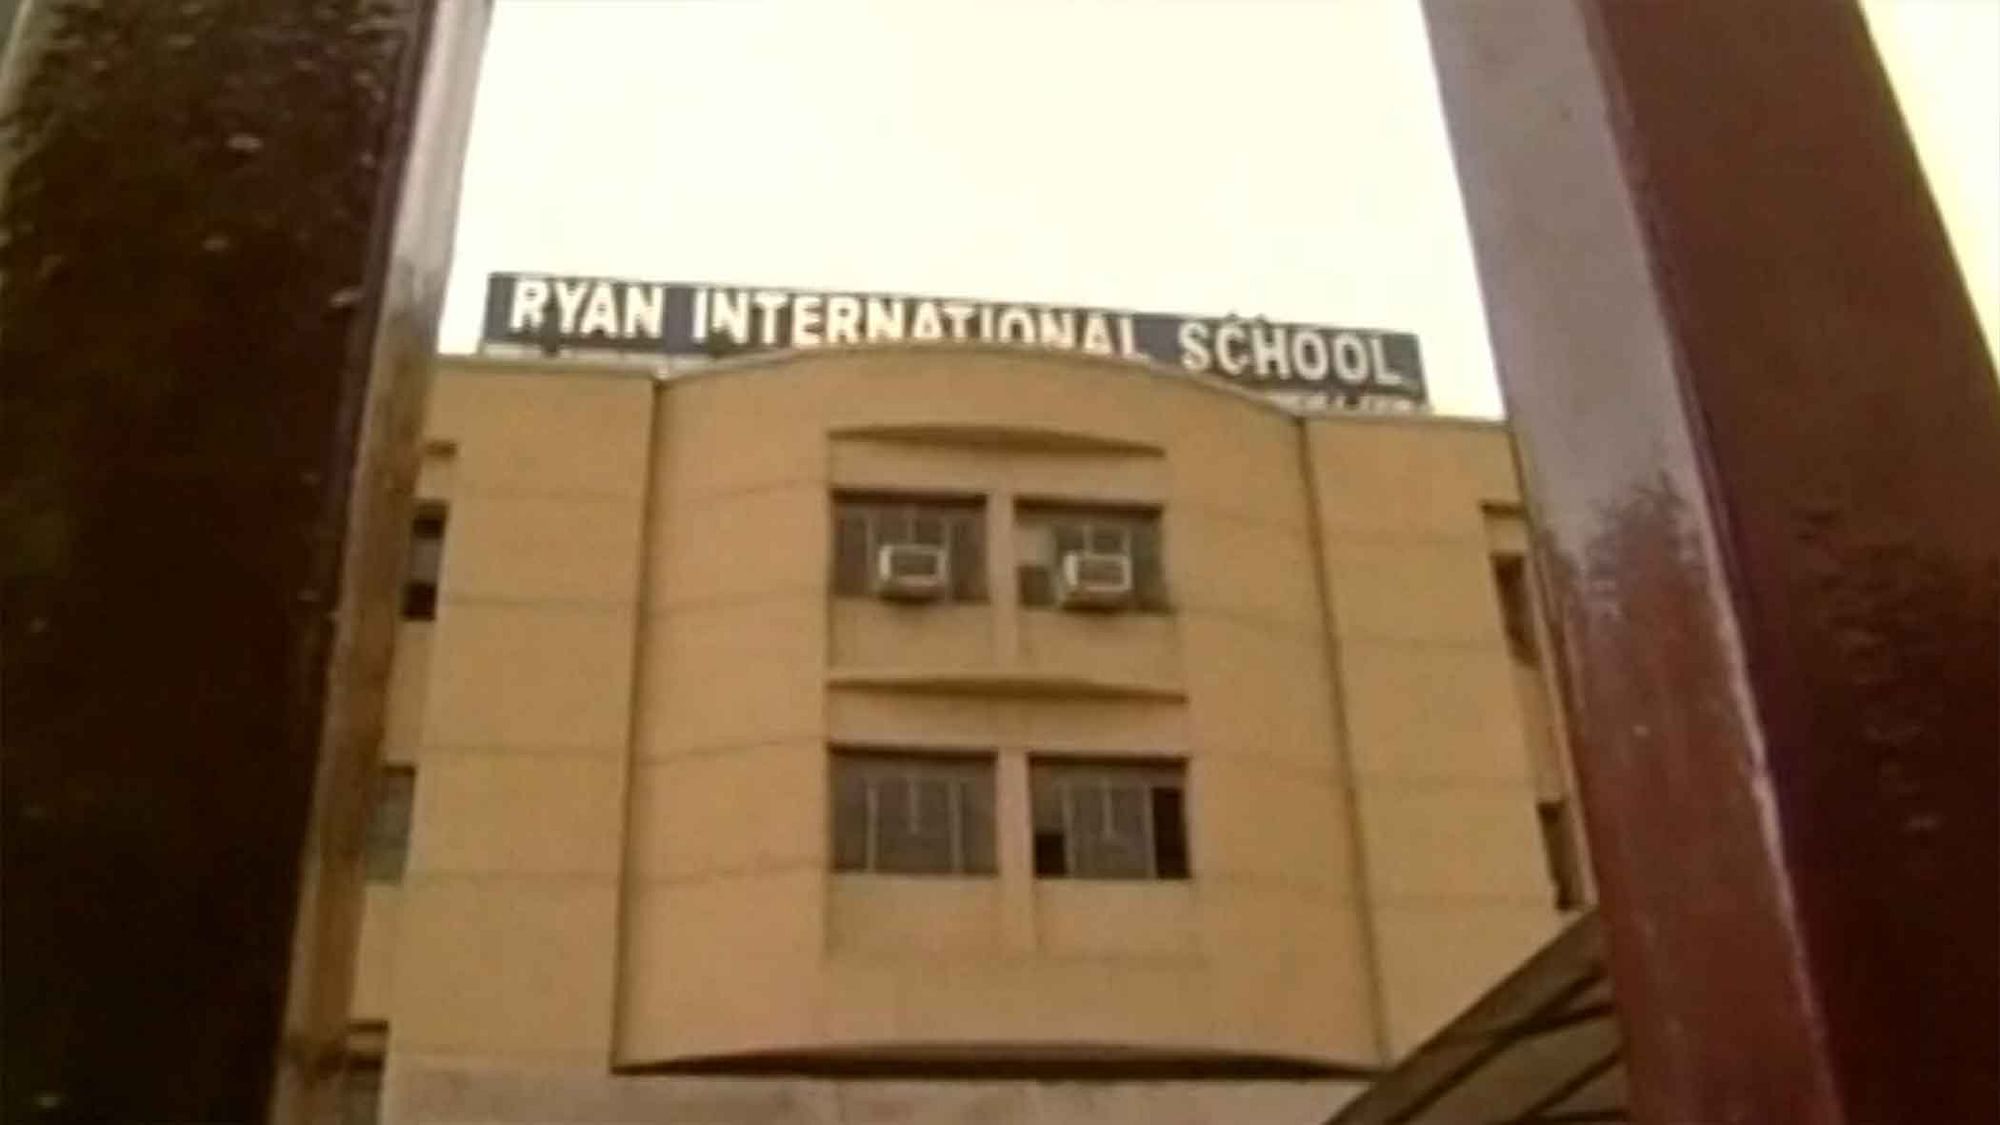 Ryan International School in Gurugram. (Photo Courtesy: Ryan International School)